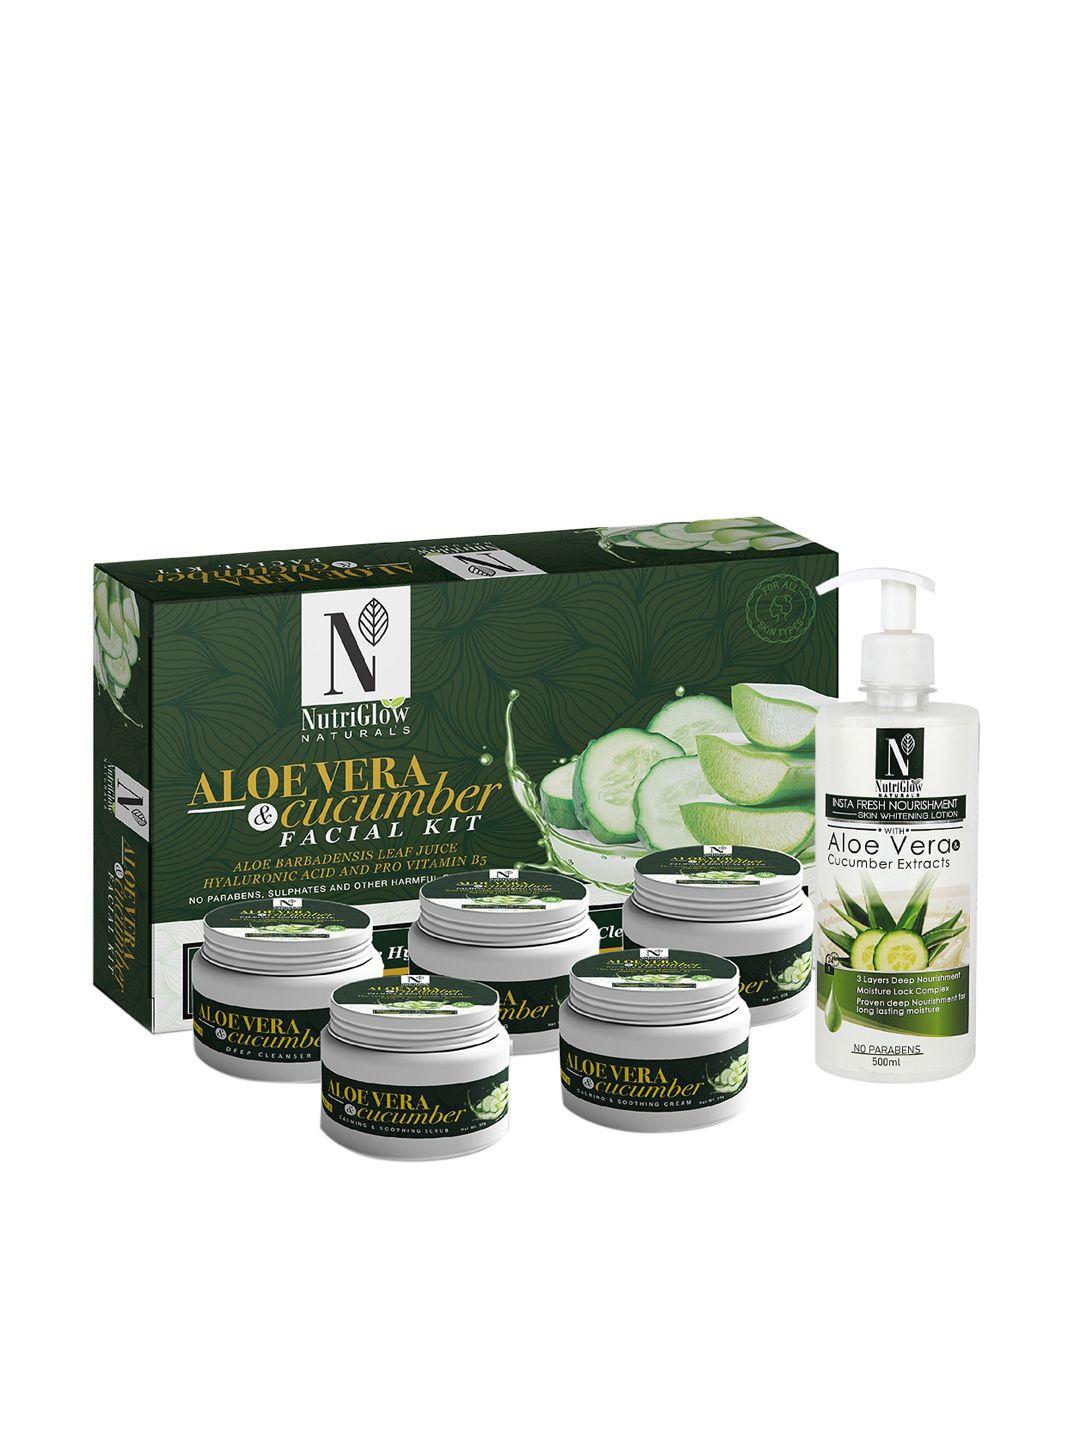 nutriglow-naturals-aloe-vera-&-cucumber-facial-kit-250g+10ml-&-skin-whitening-lotion-500ml